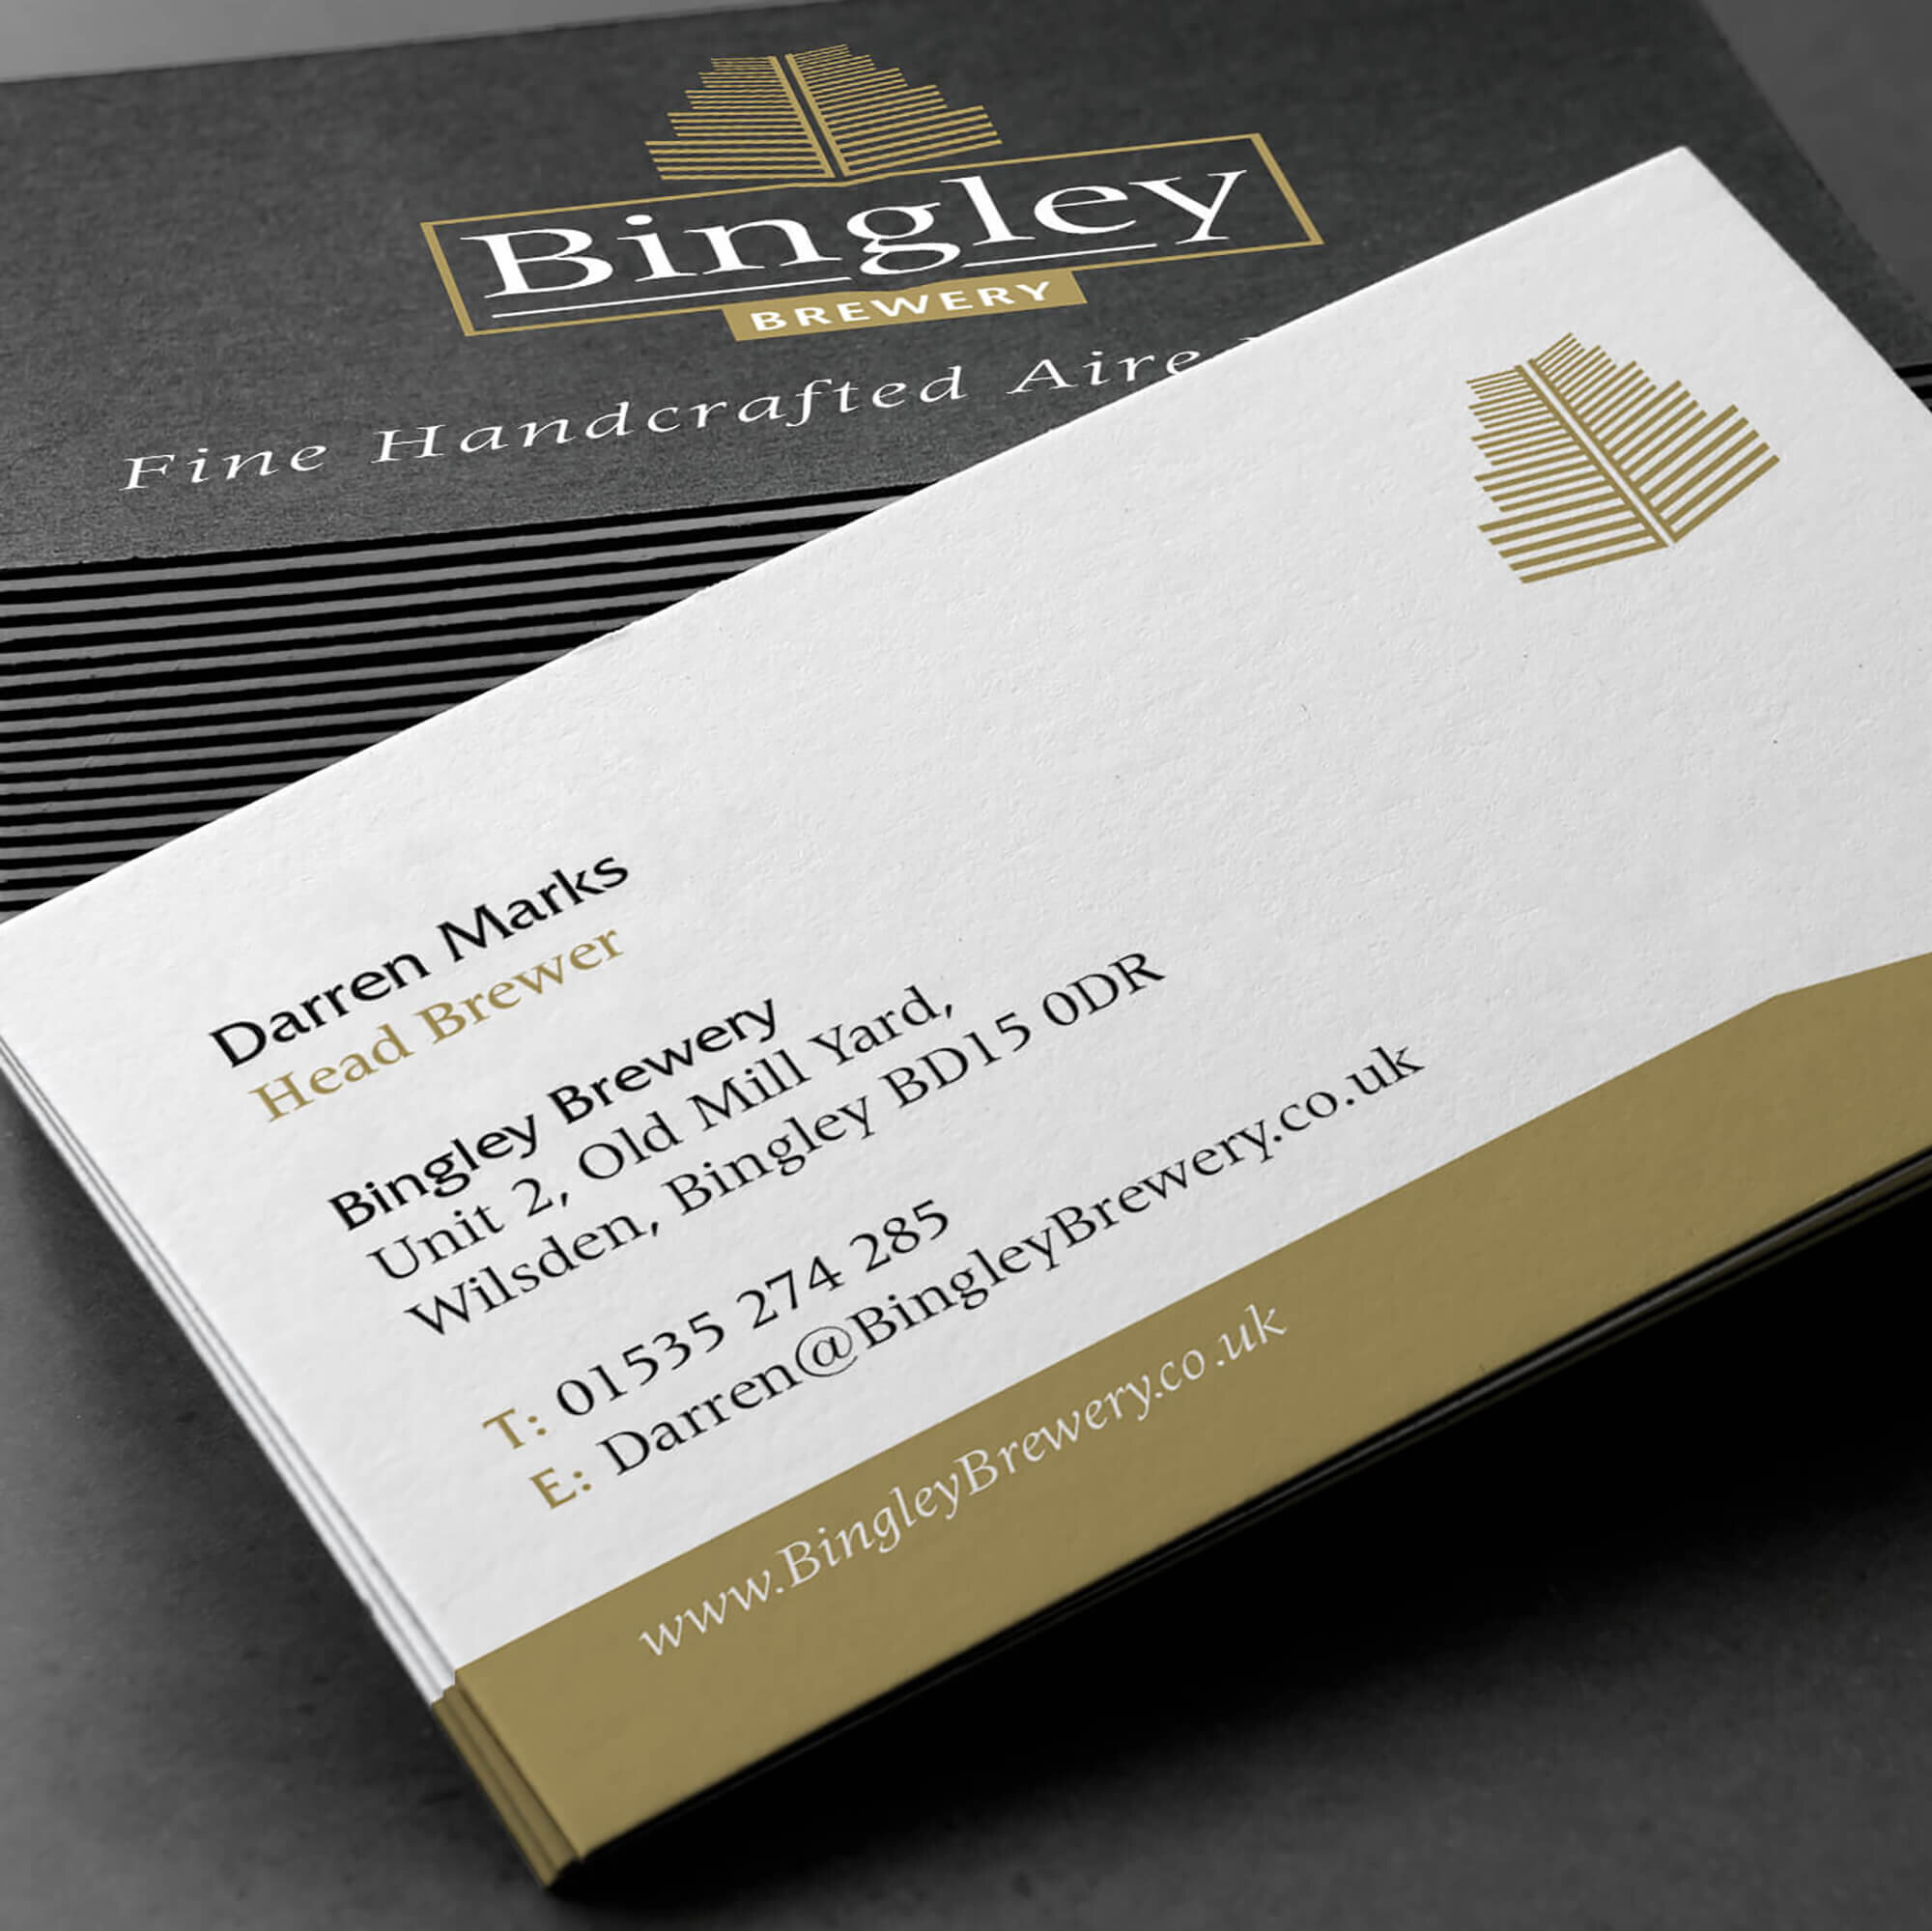 Bingley Brewery cards.jpg